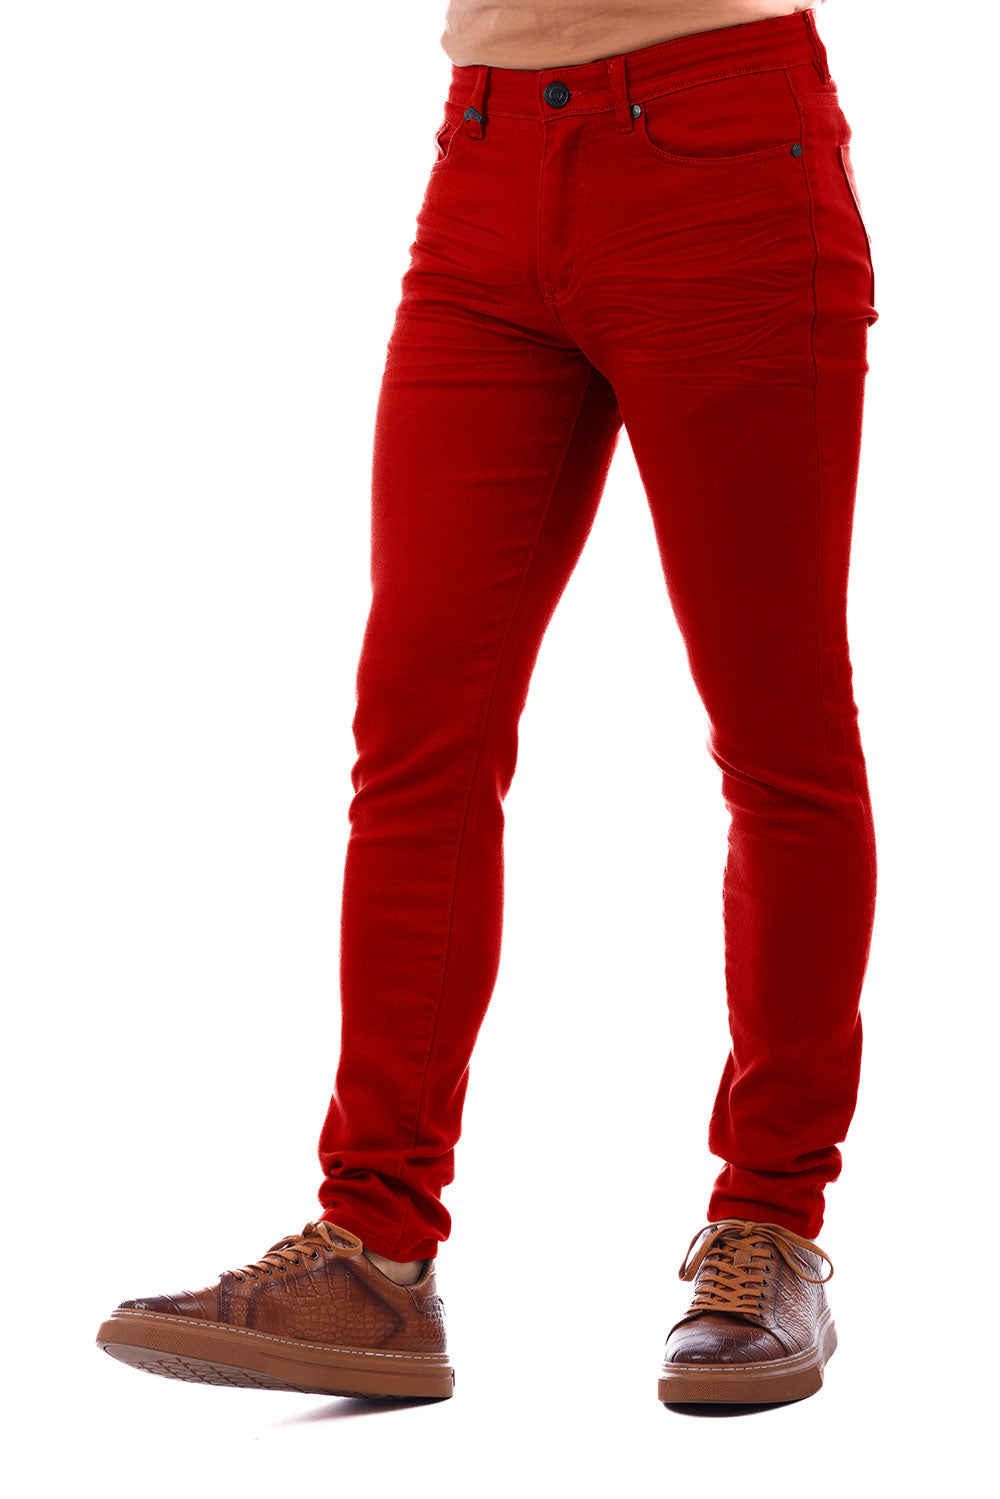 Barabas Men's Skinny Fit Classic Denim Solid Color Jeans 1700 Red